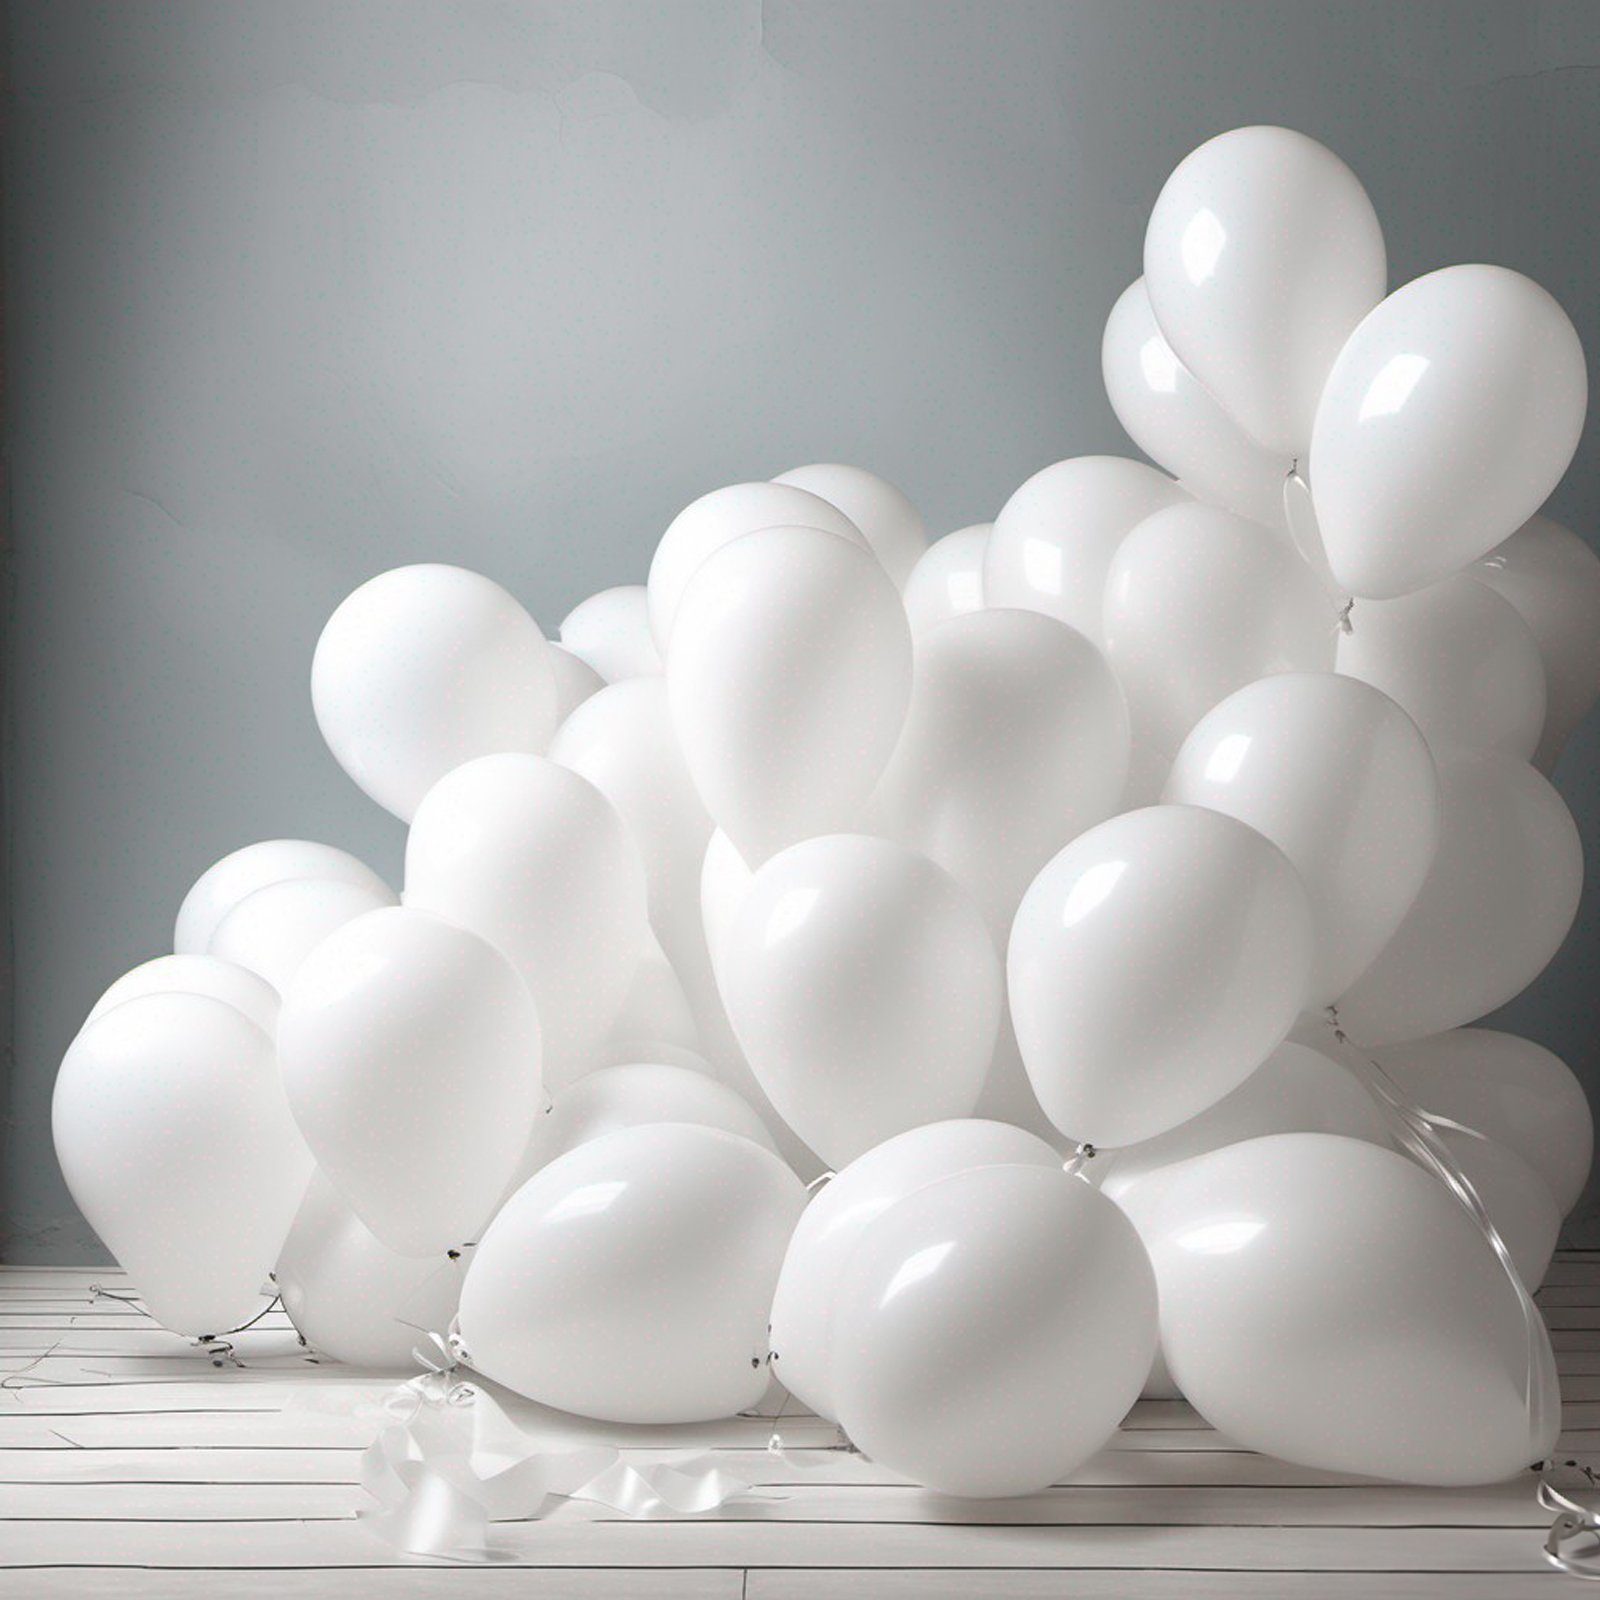 SLP-, pcs 30cm Luftballon 12-Zoll-Ballon weiß/bunt 100/200 Perlglanzfarbe SunJas